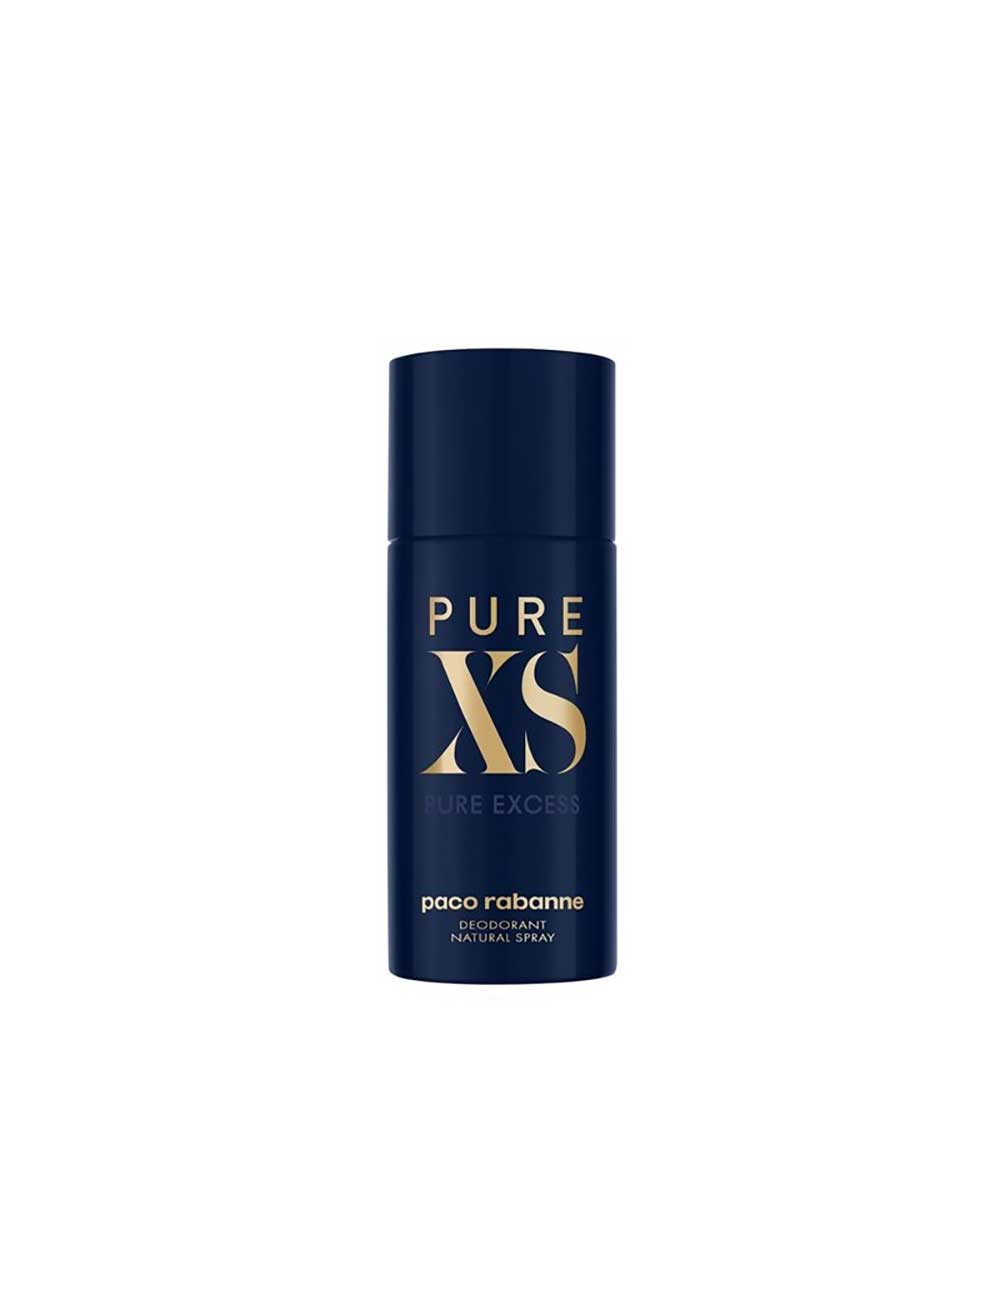 Pure XS Deodorant vapo | Mabel Profumerie | Cosmesi, profumi